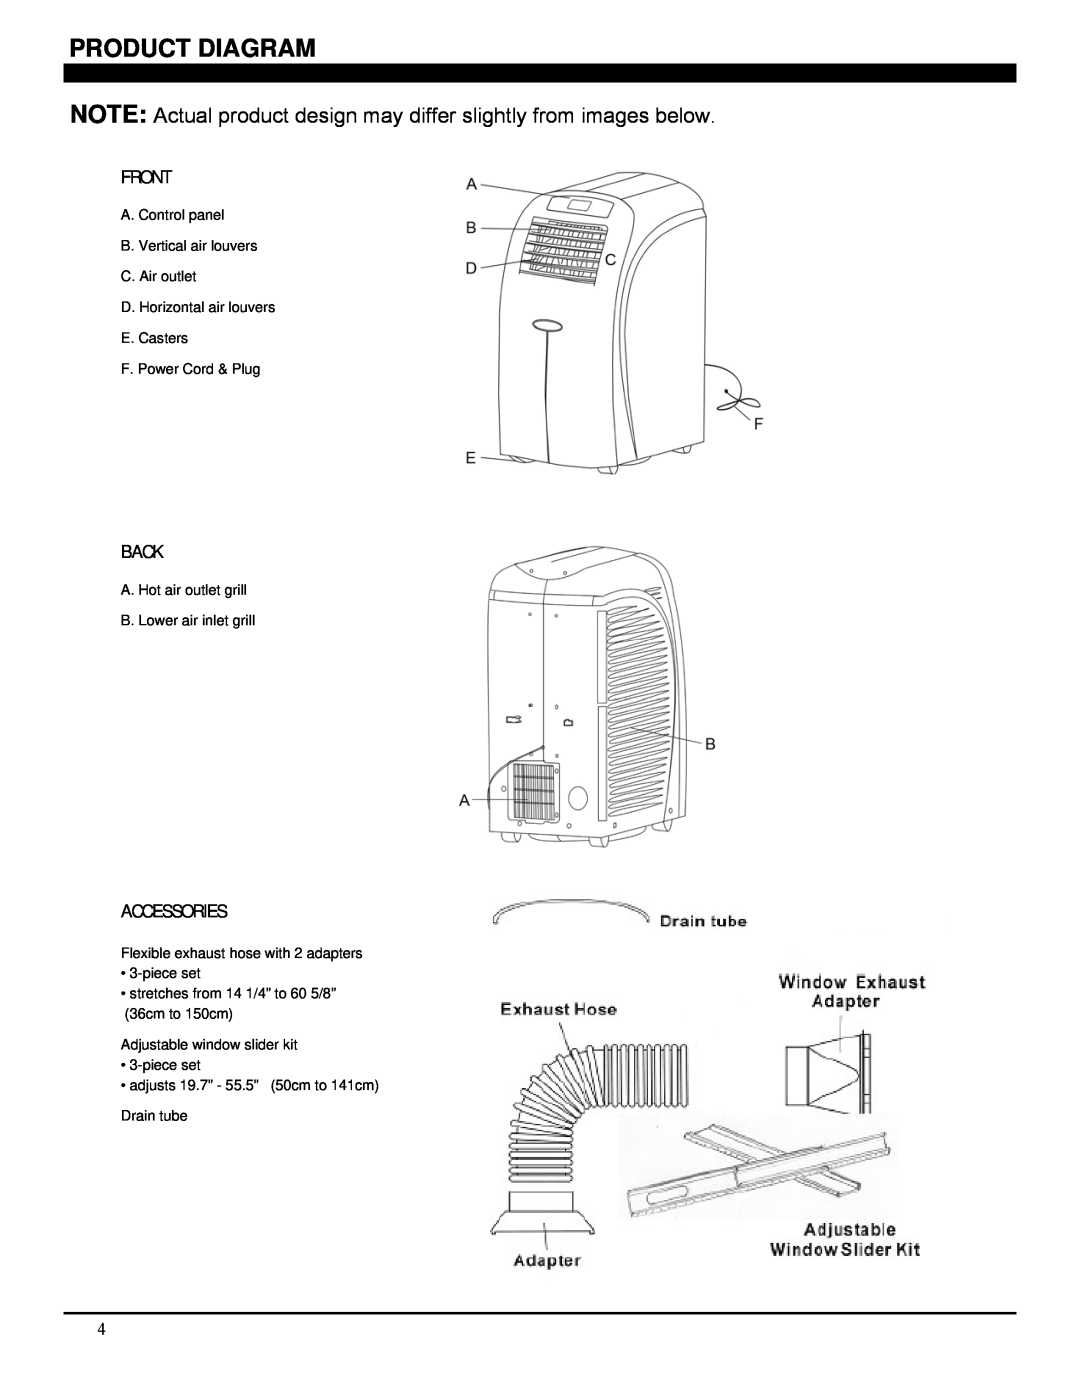 Soleus Air PE6-10R-03 manual Product Diagram, Front, Back, Accessories 